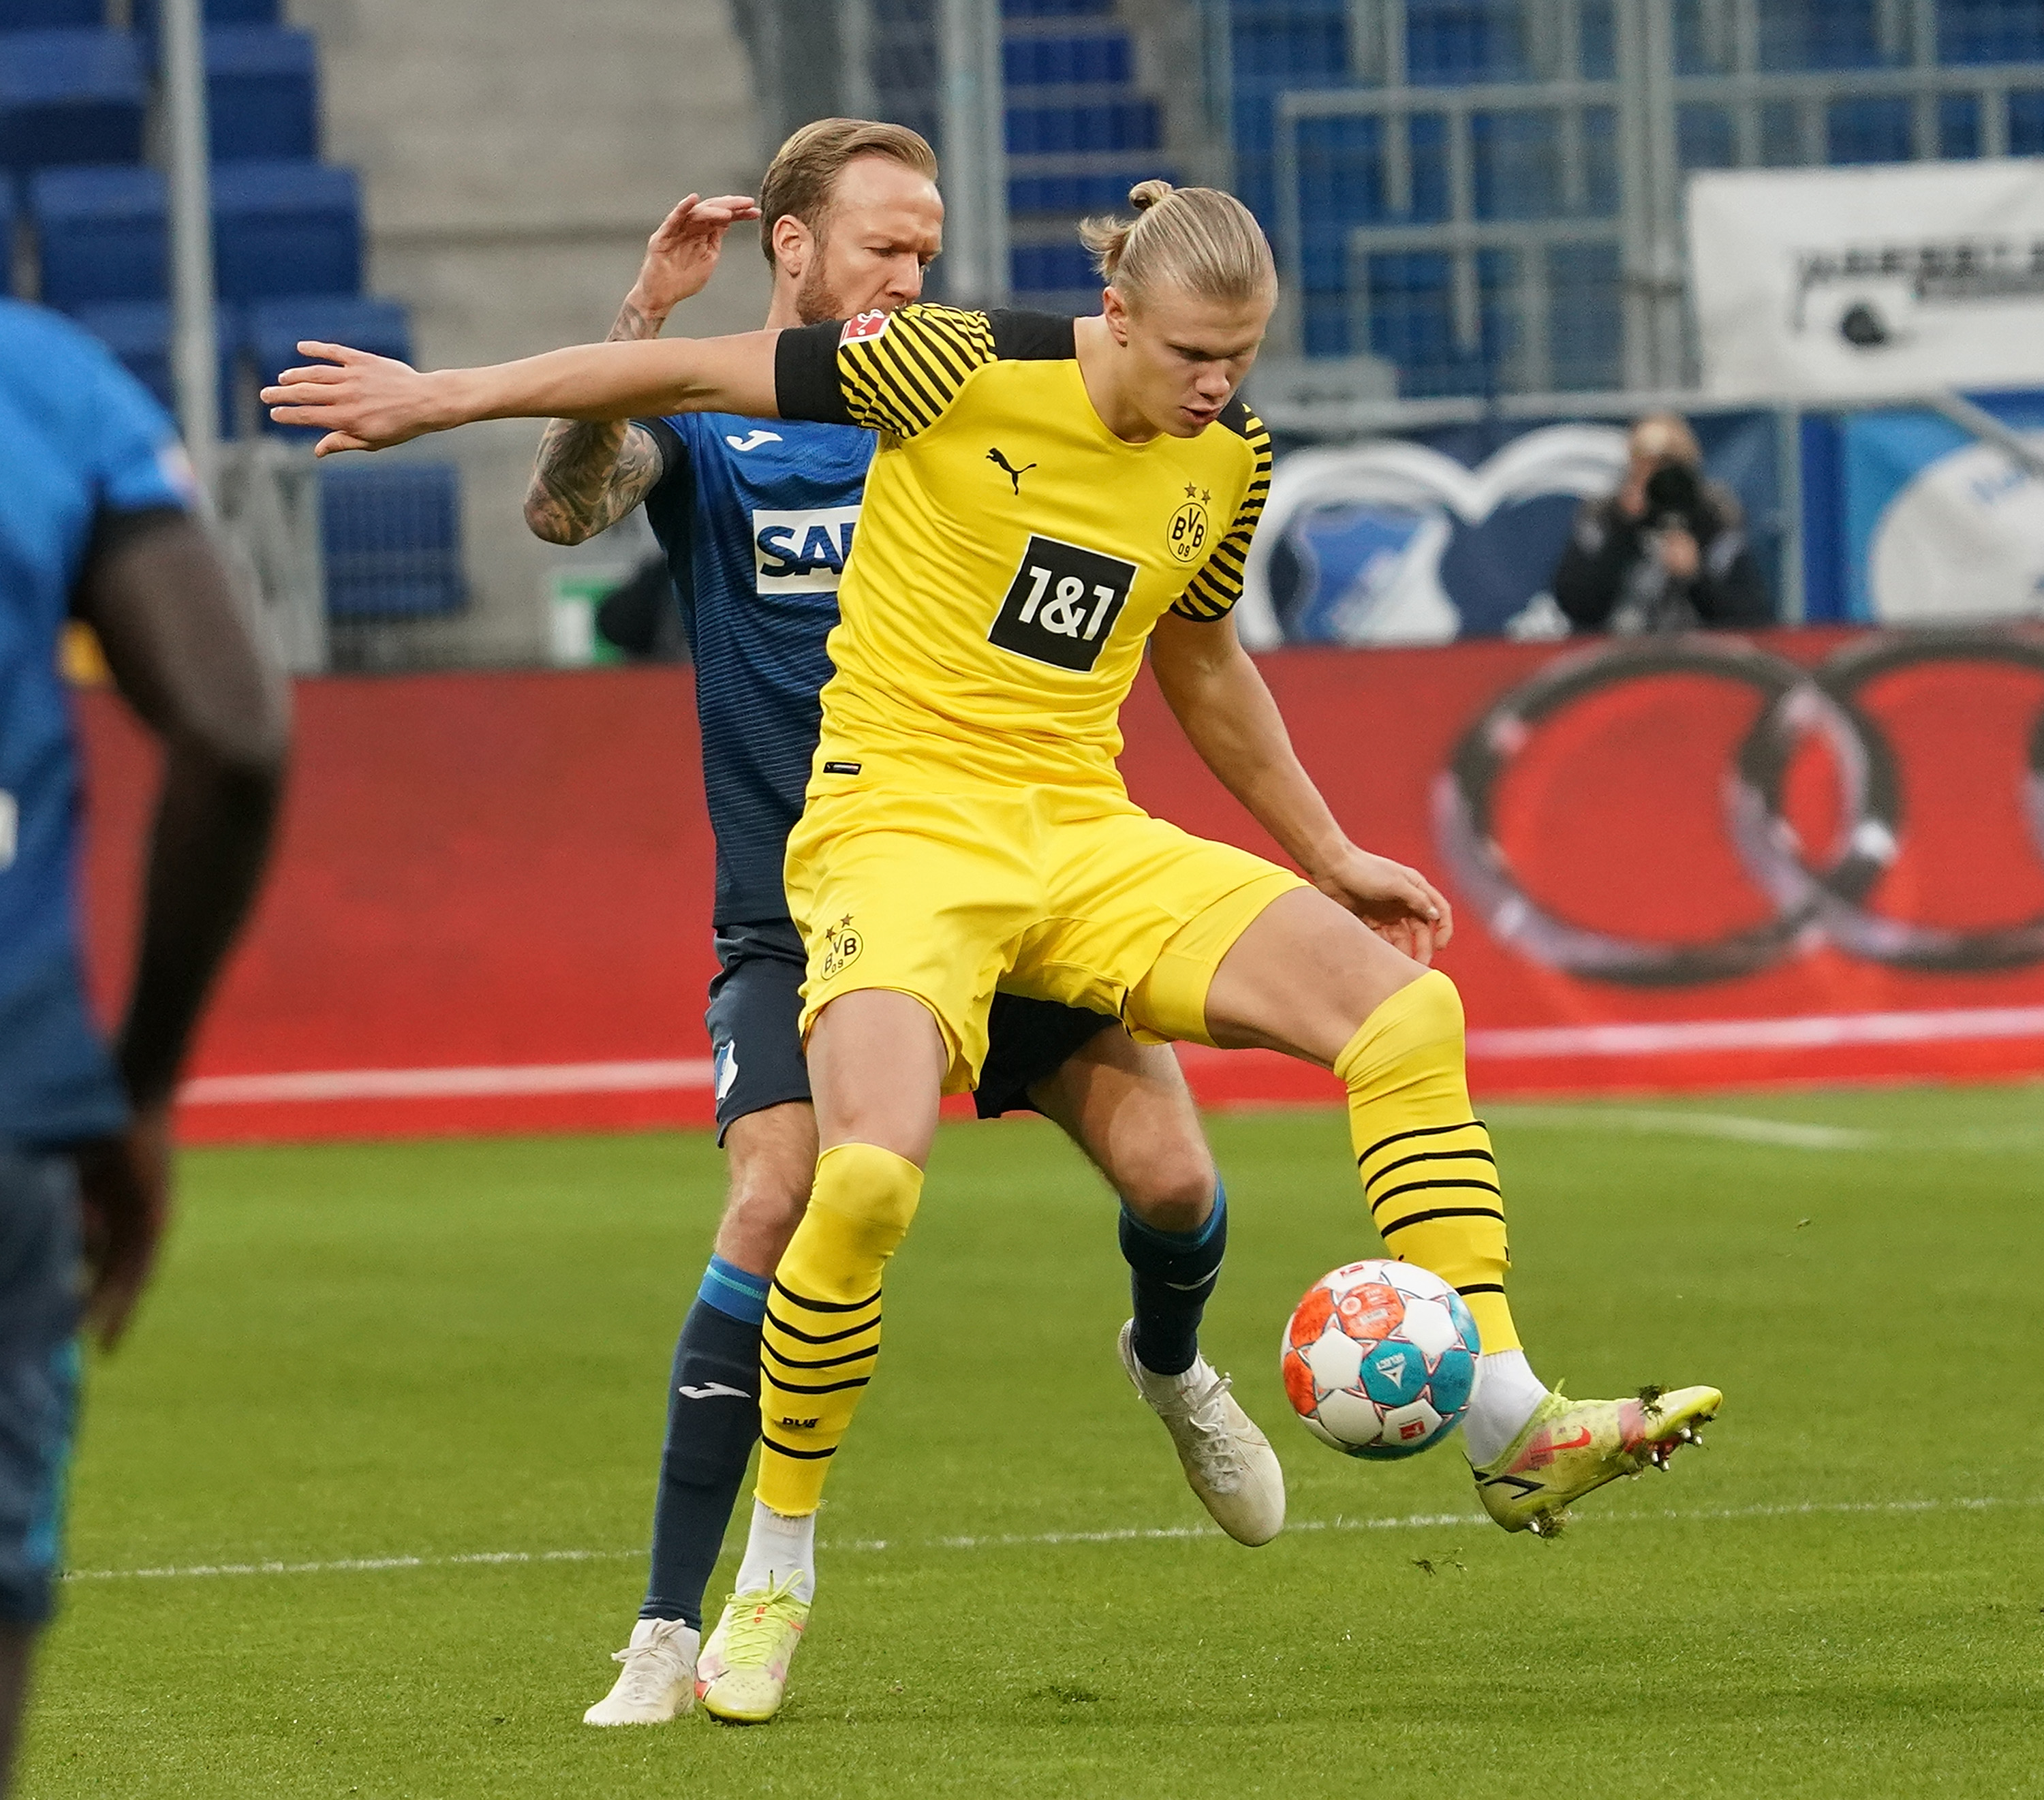 TSG Hoffenheim v Borussia Dortmund - Bundesliga